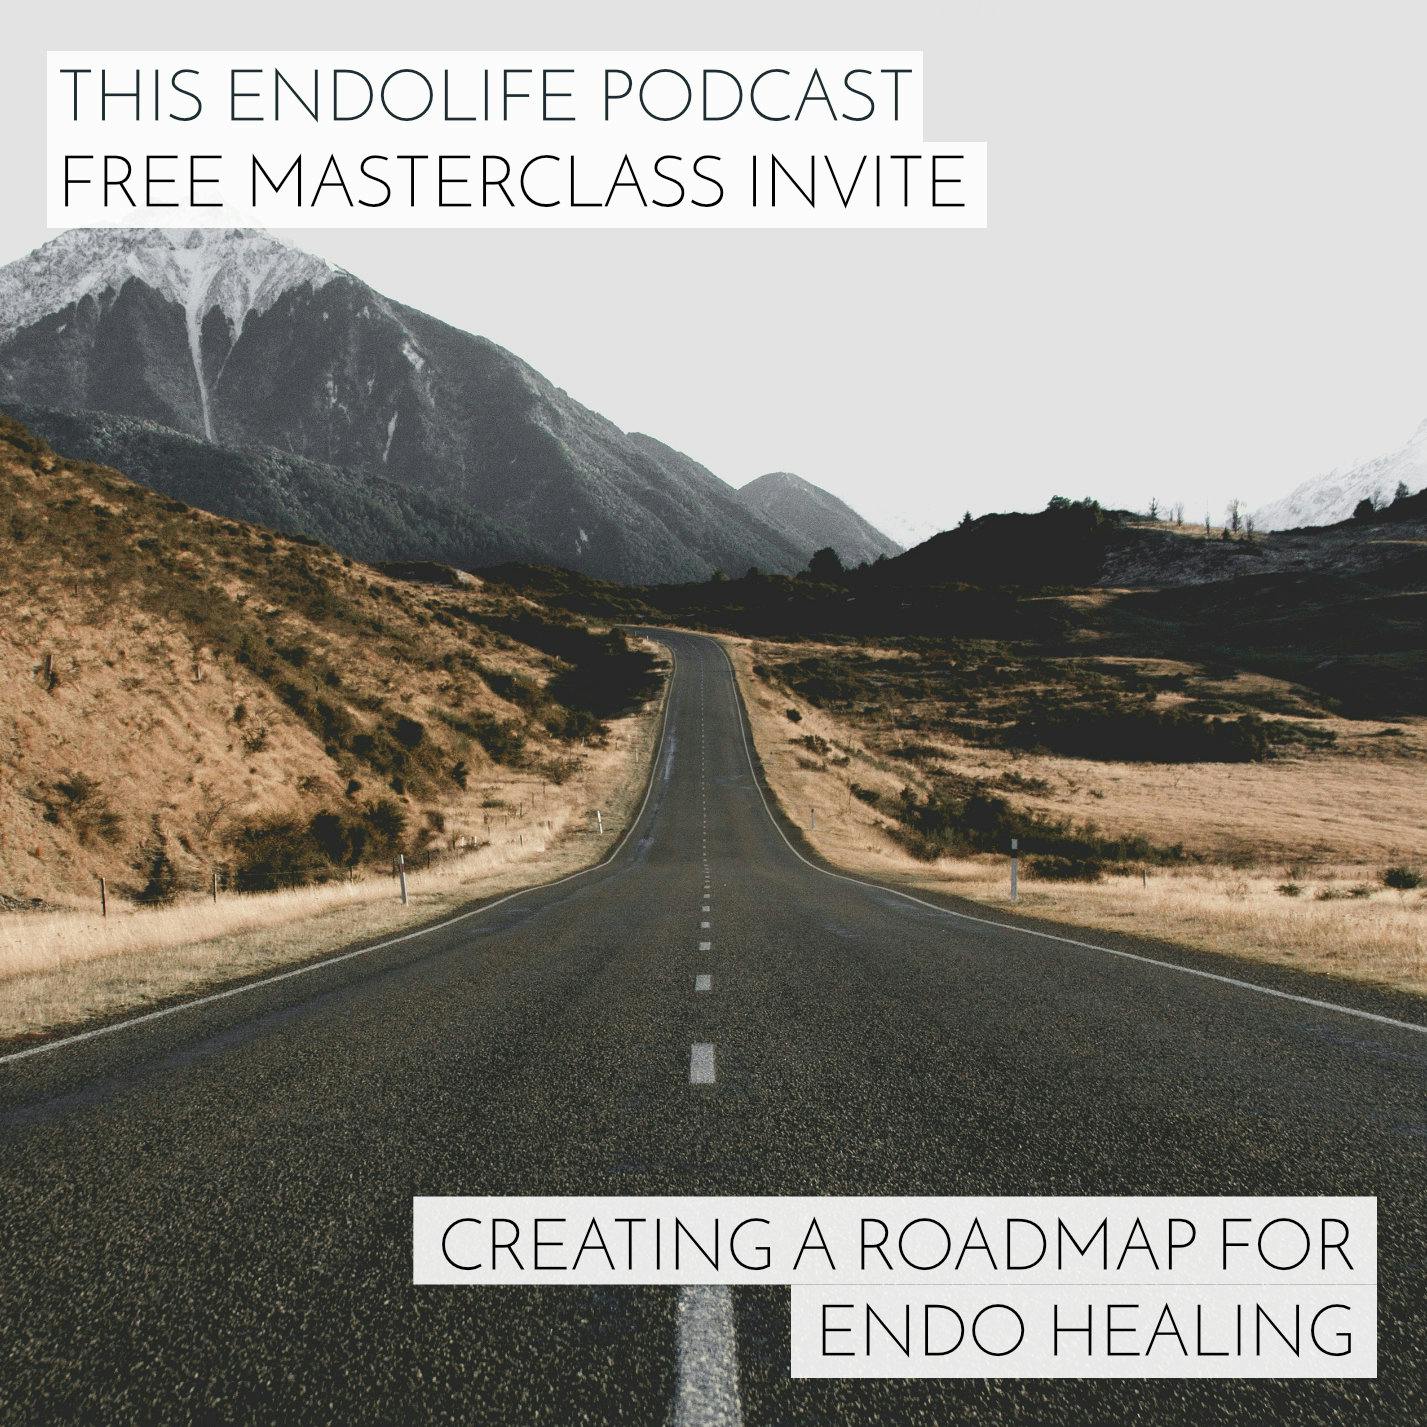 FREE Masterclass: Creating a Roadmap for Endo Healing